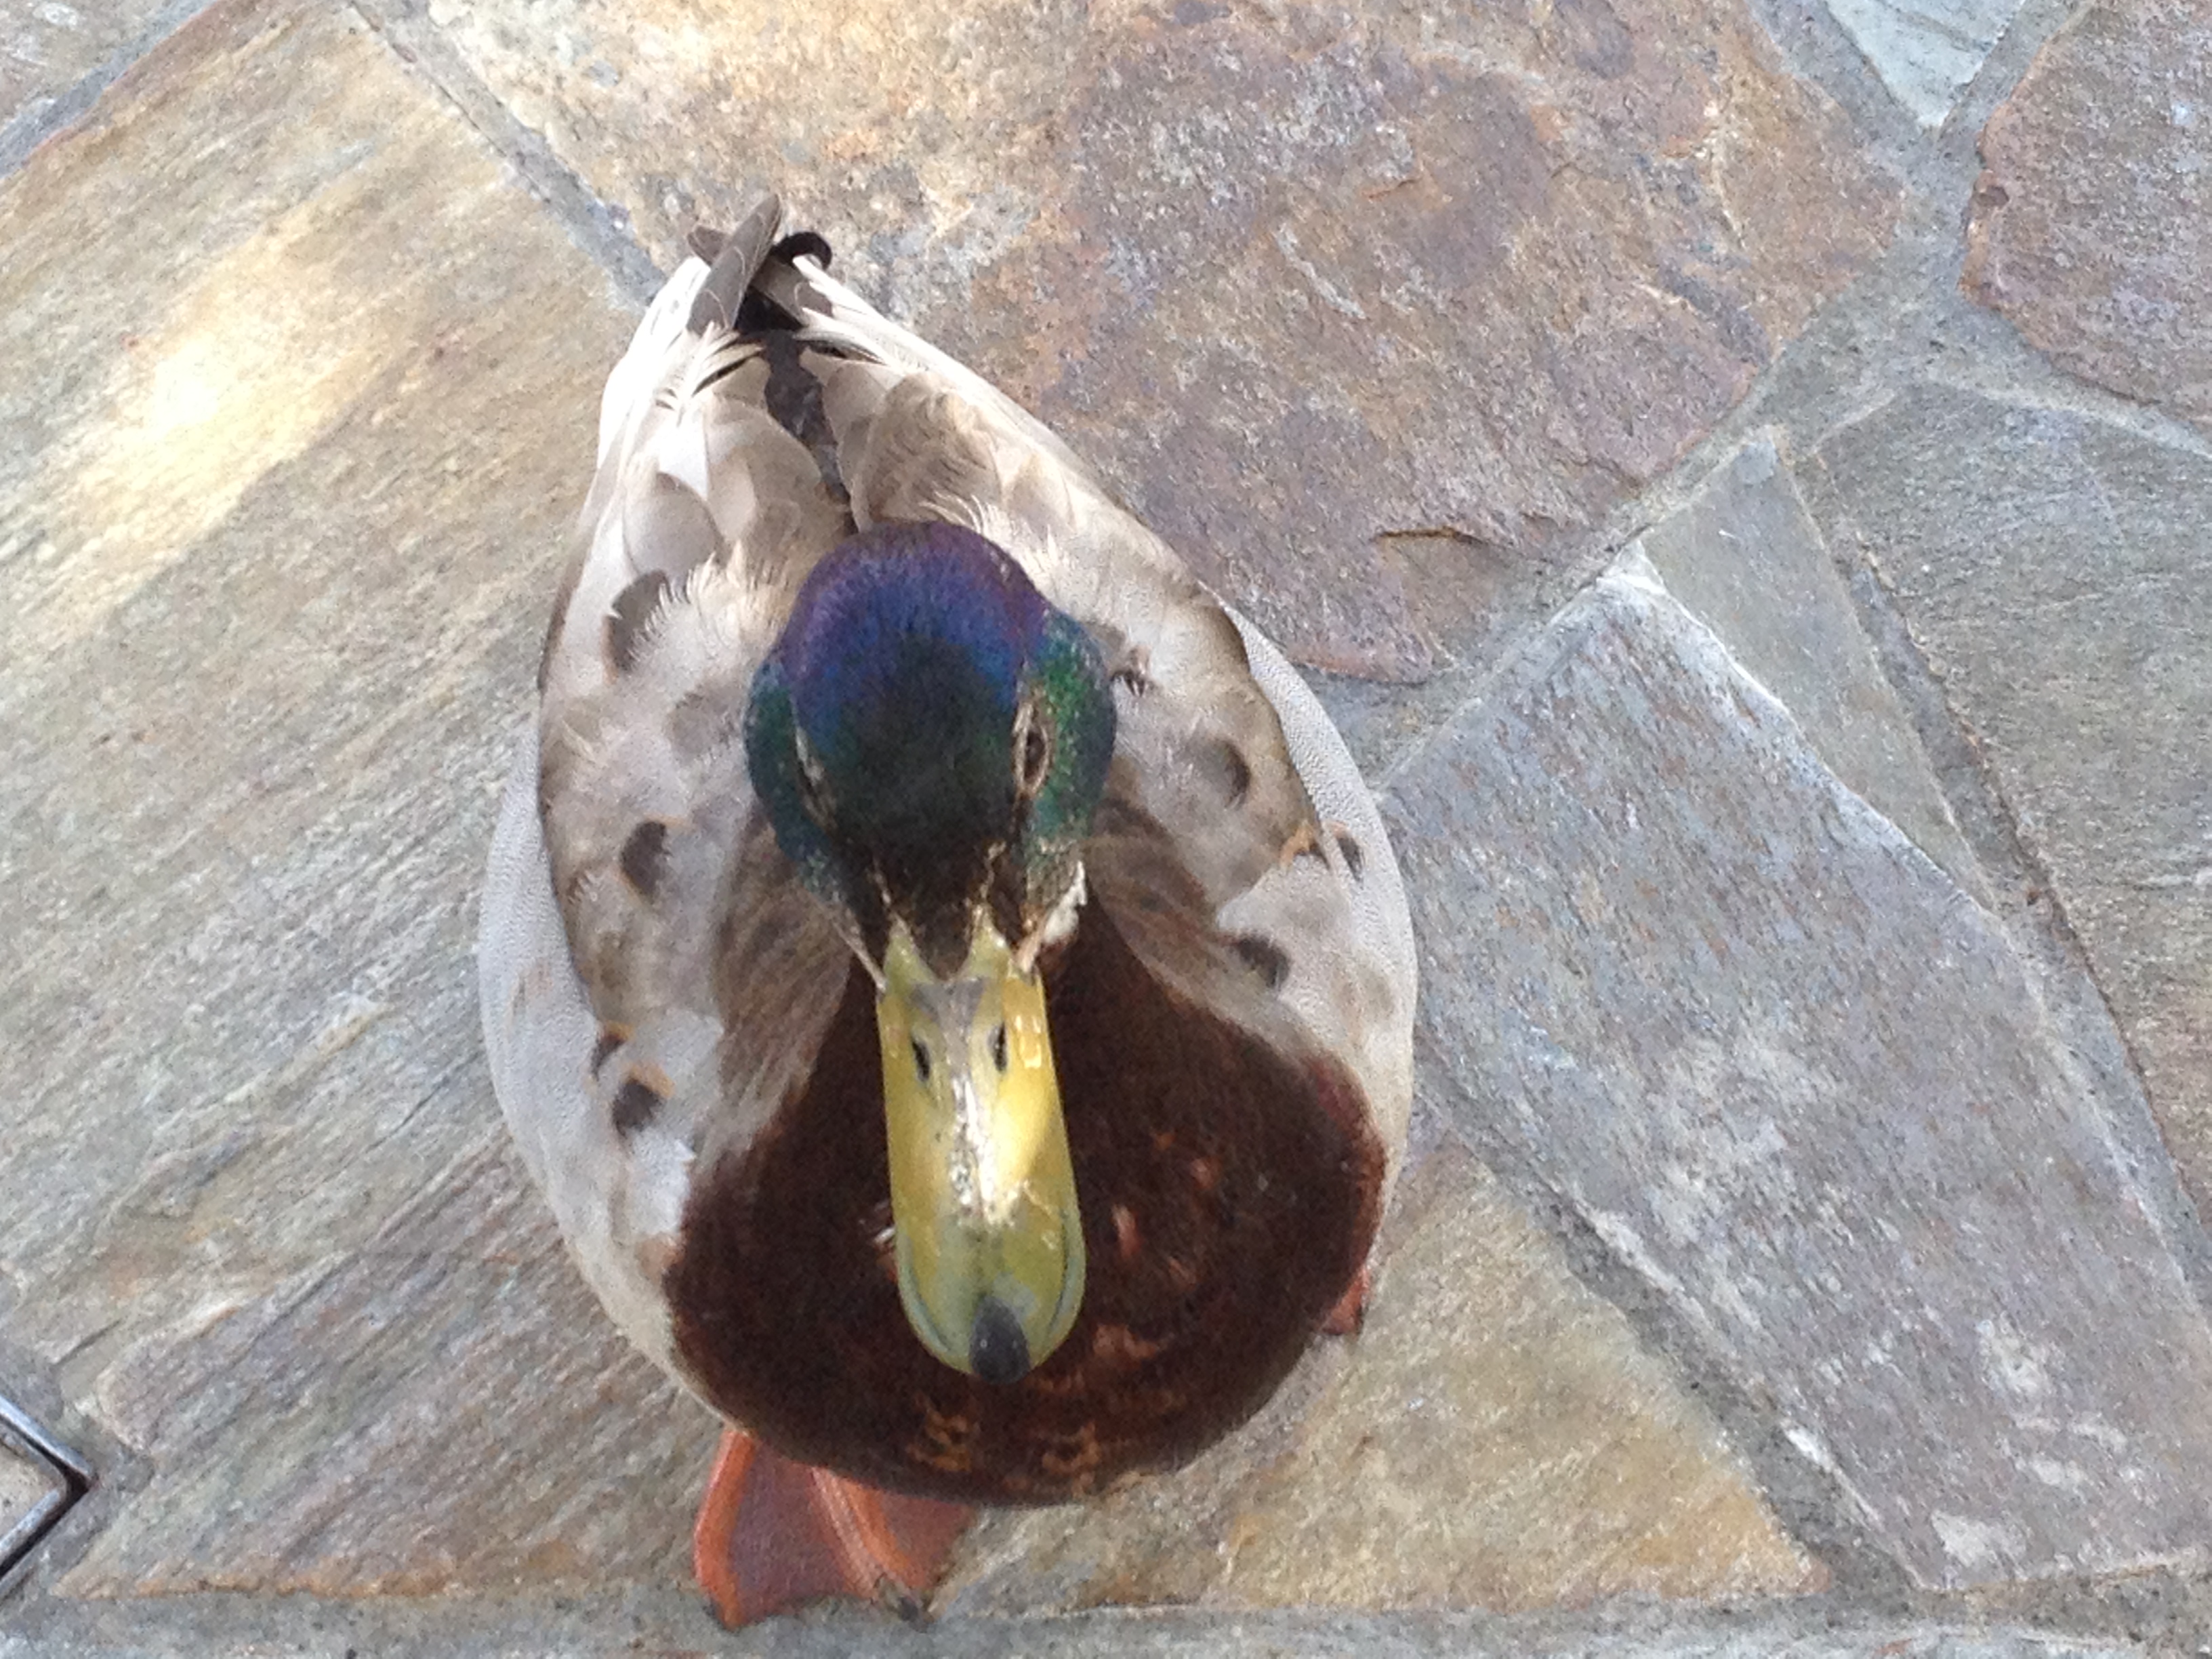 My ducky little friend from Disneyland